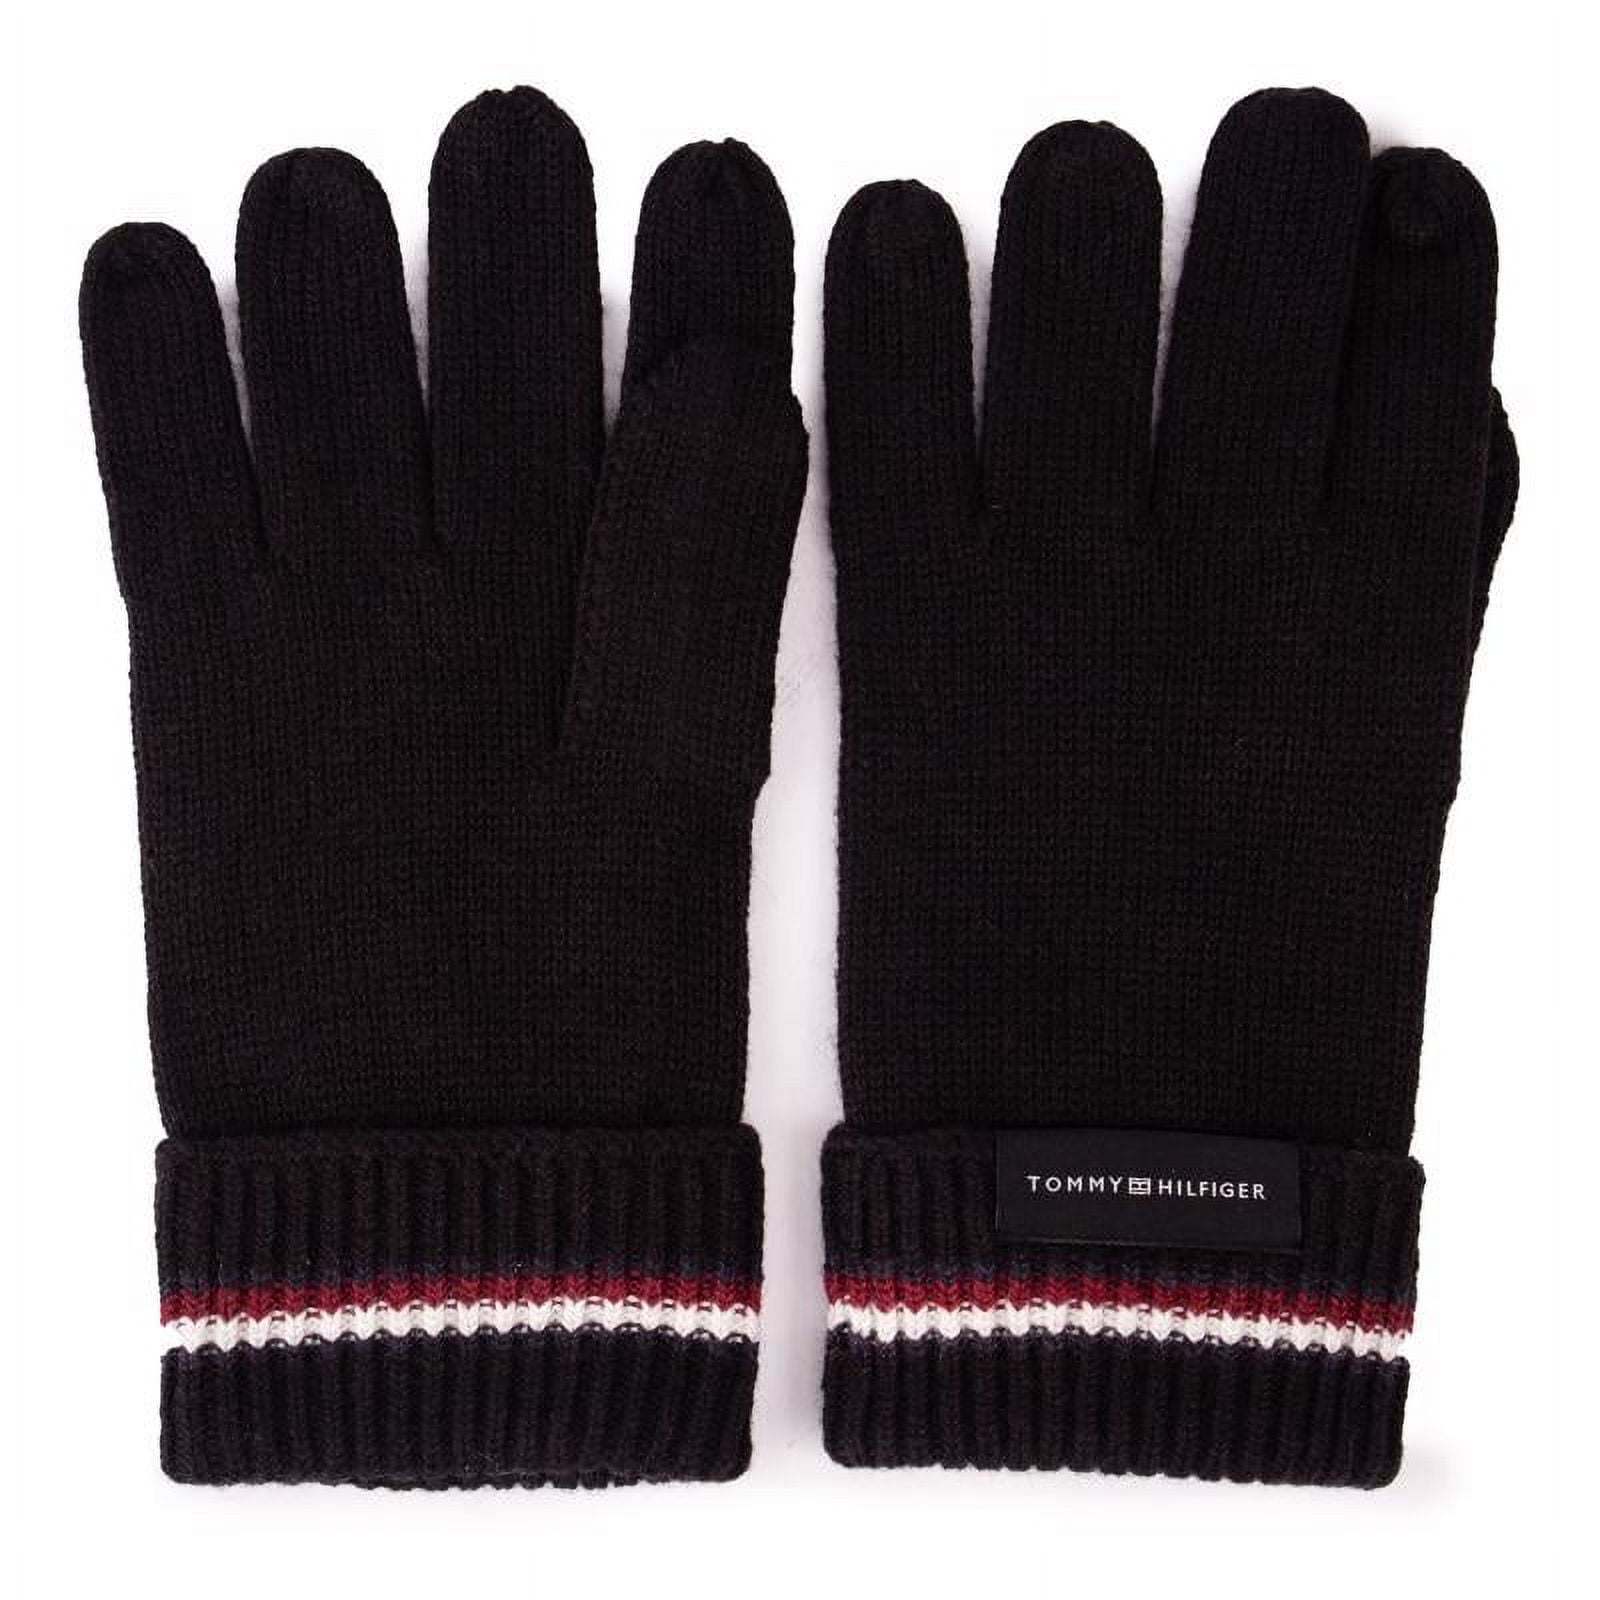 Gloves Hilfiger Knit Tommy Corporate